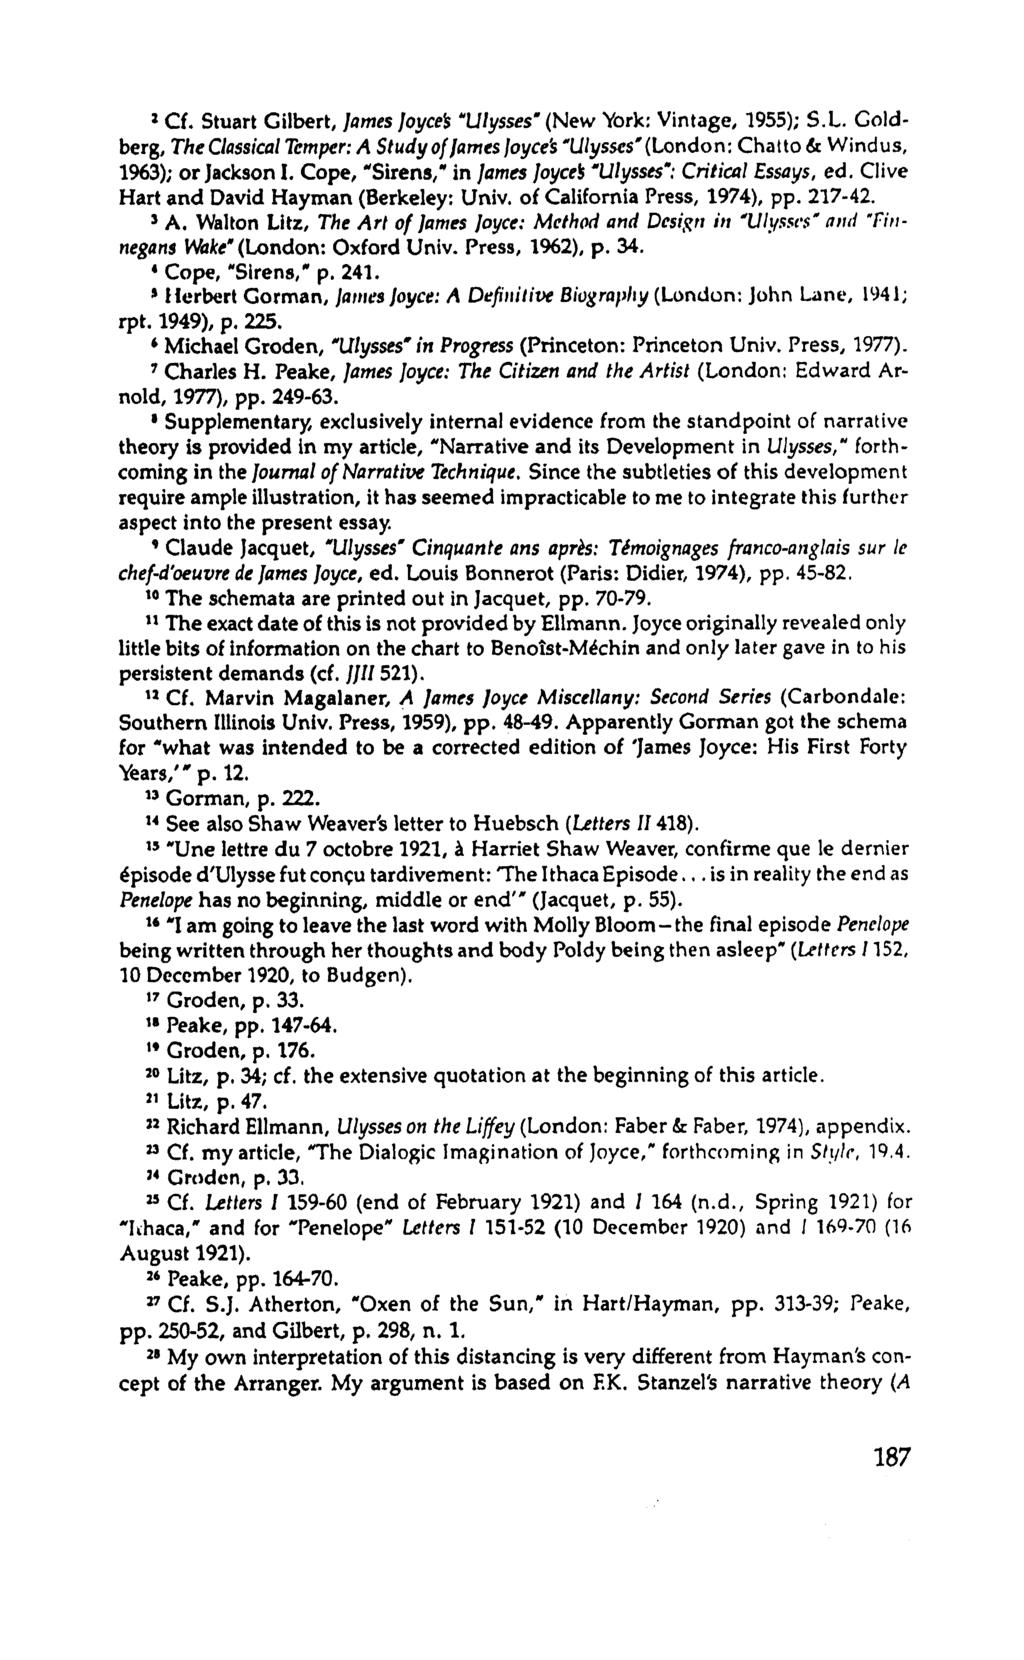 2 Cf. Stuart Gilbert, James Joyce "Ulysses" (New York: Vintage, 1955); S.L. Goldberg, The Classical Temper: A Study of James Joyce's "Ulysses' (London: Cha to & Windus, 1963); or Jackson I.